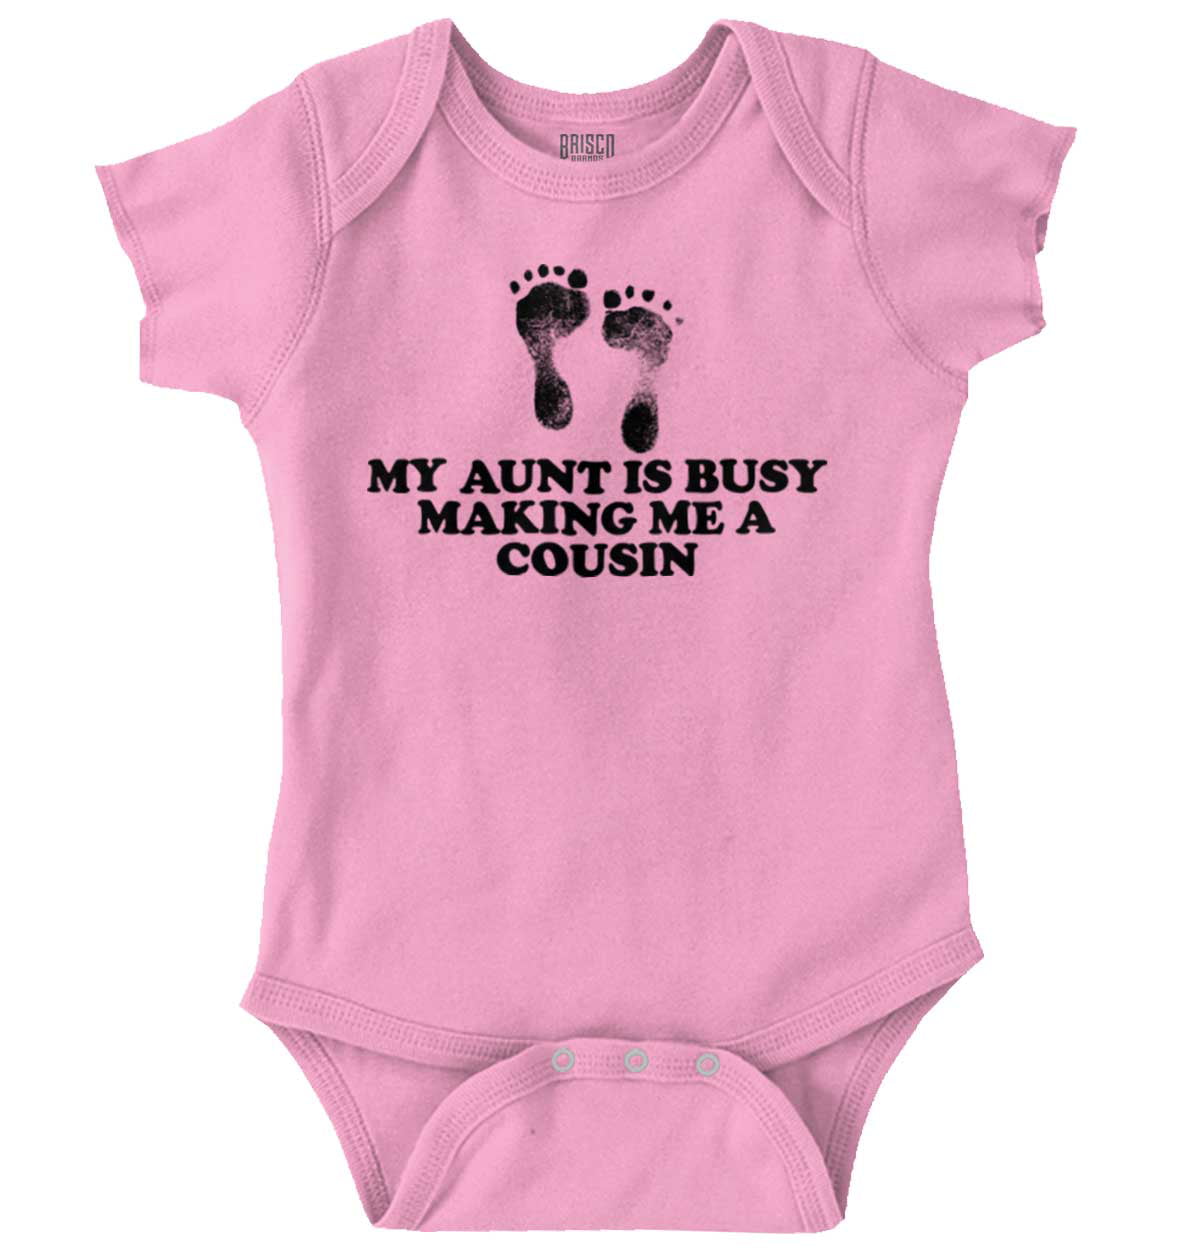 I am the Big cousin Baby Vest cute grow Funny bodysuit New Gift Idea Boys Design